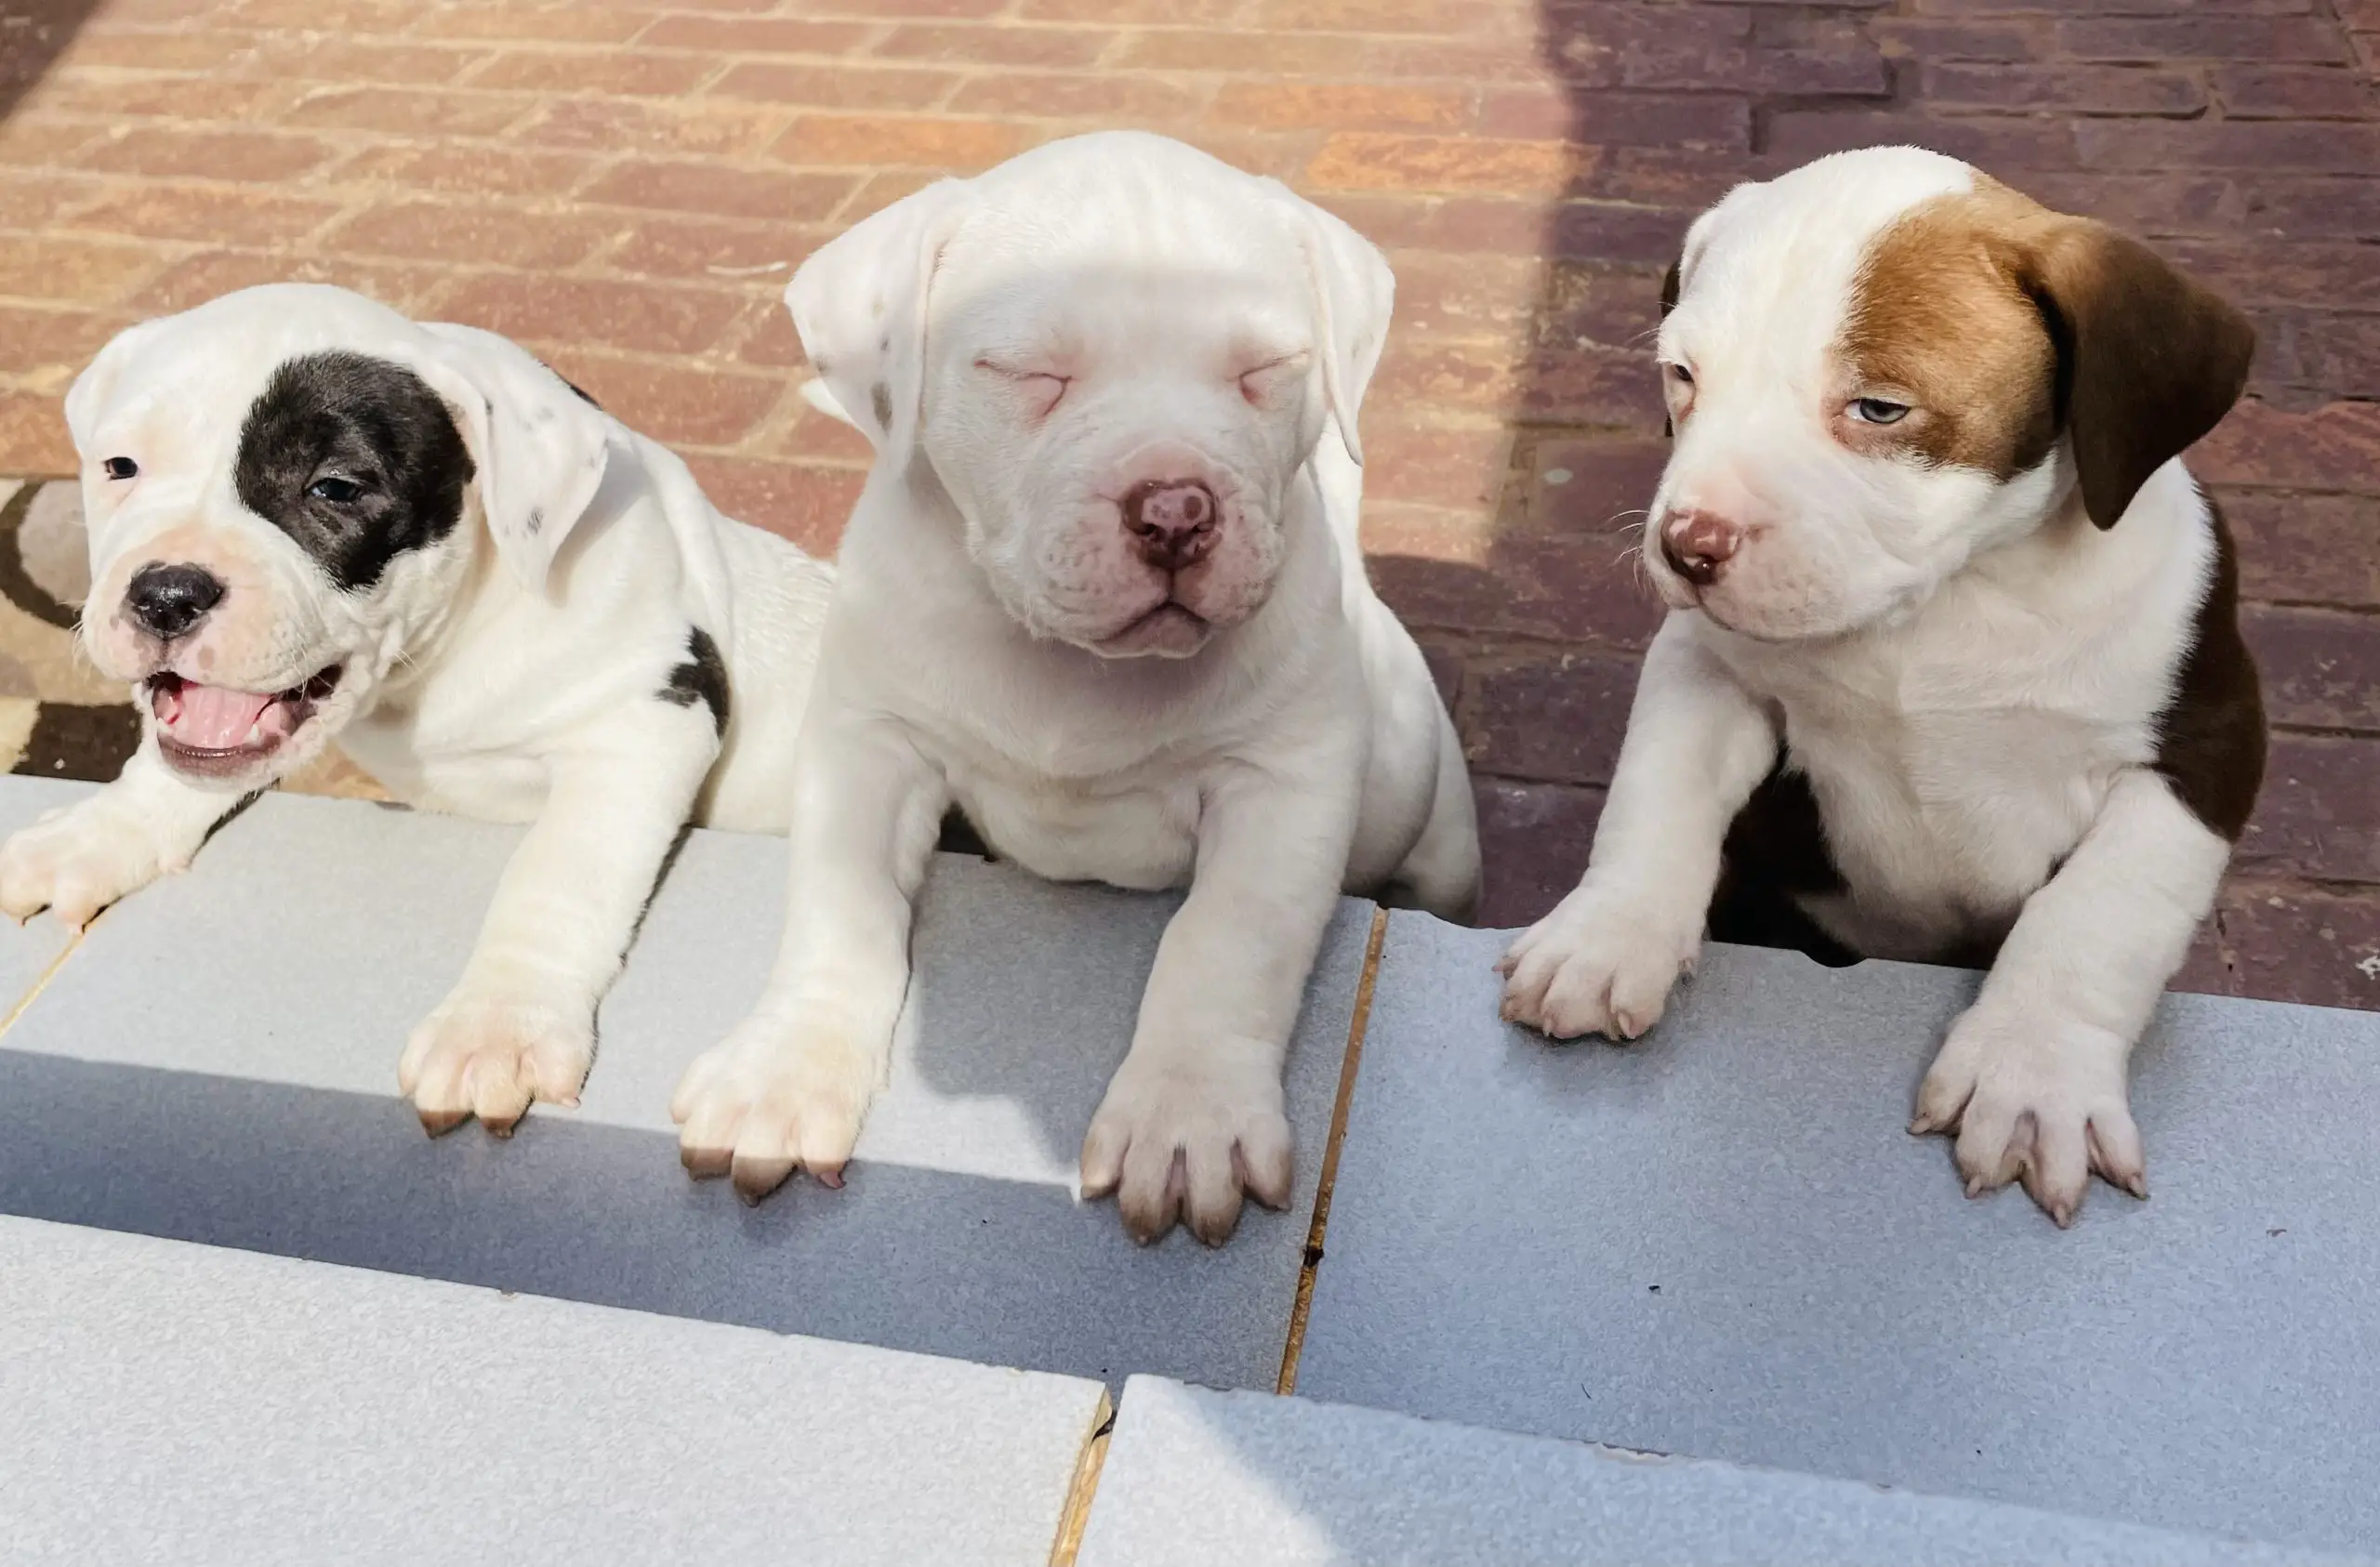 Pitbull Puppies in Johannesburg (26/05/2022)